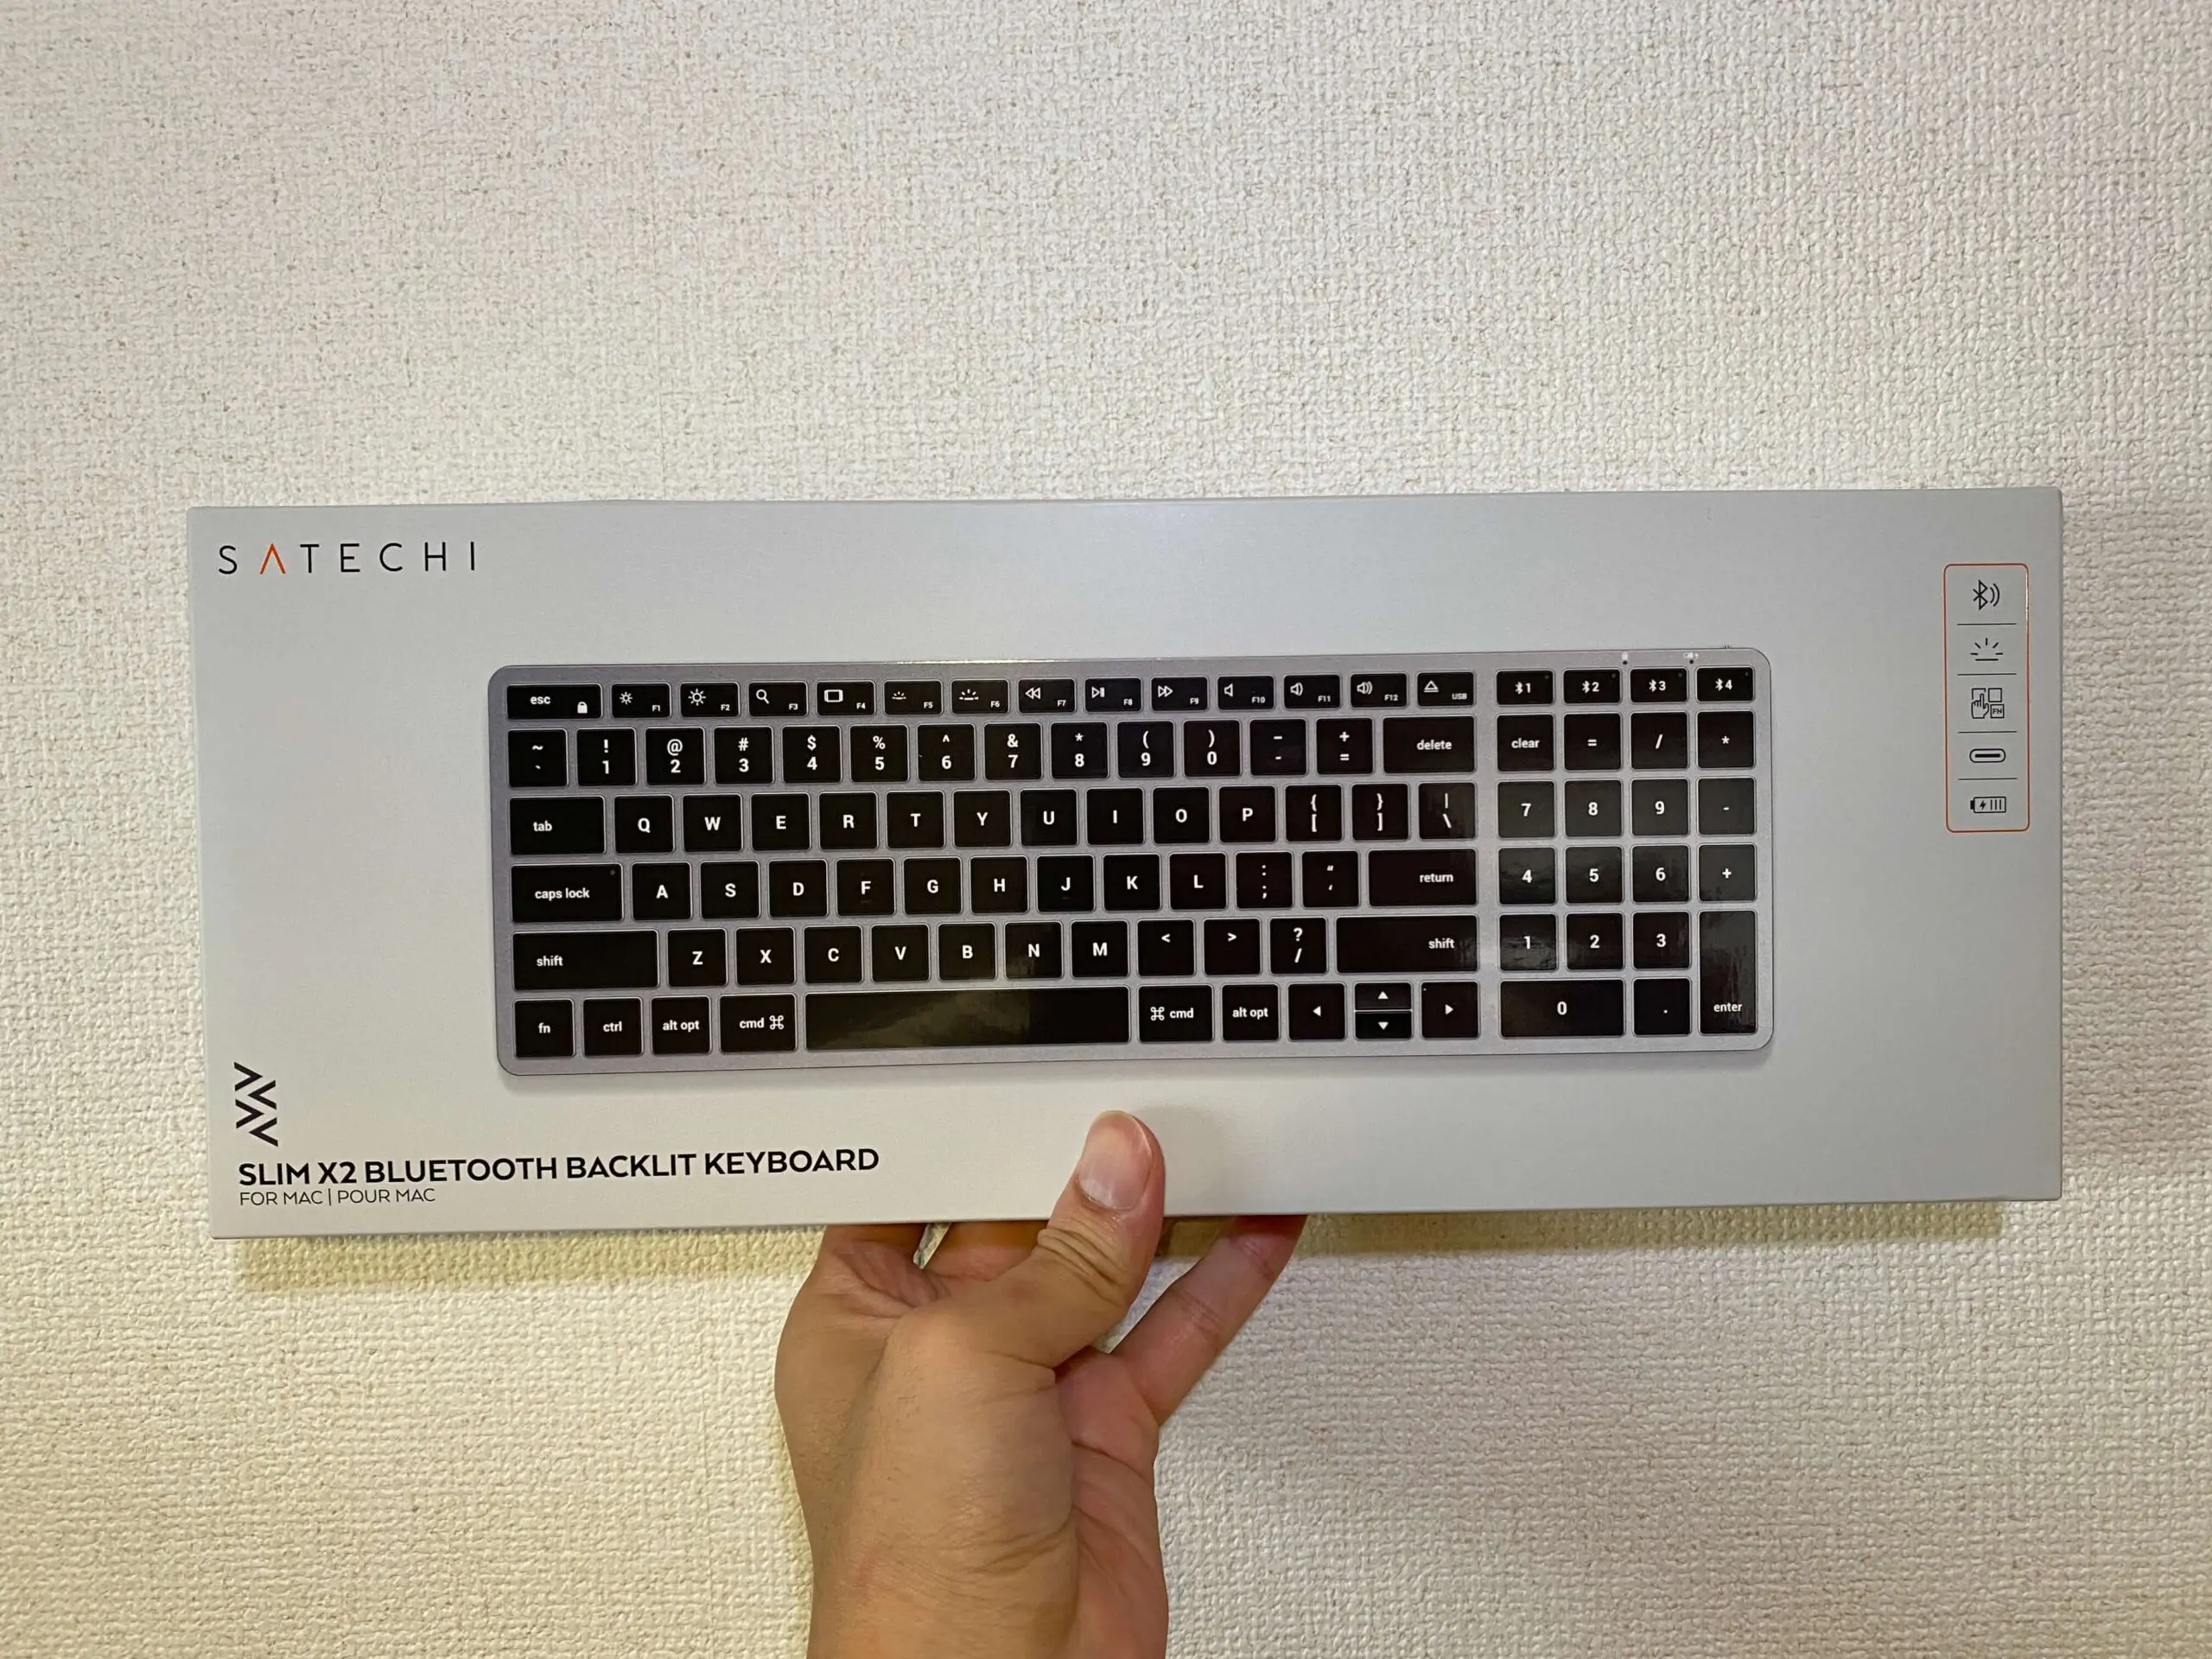 Satechi スリム X3 Bluetooth バックライトキーボード マルチペア (スペースグレイ) (3ゾーン) (iMac, Mac